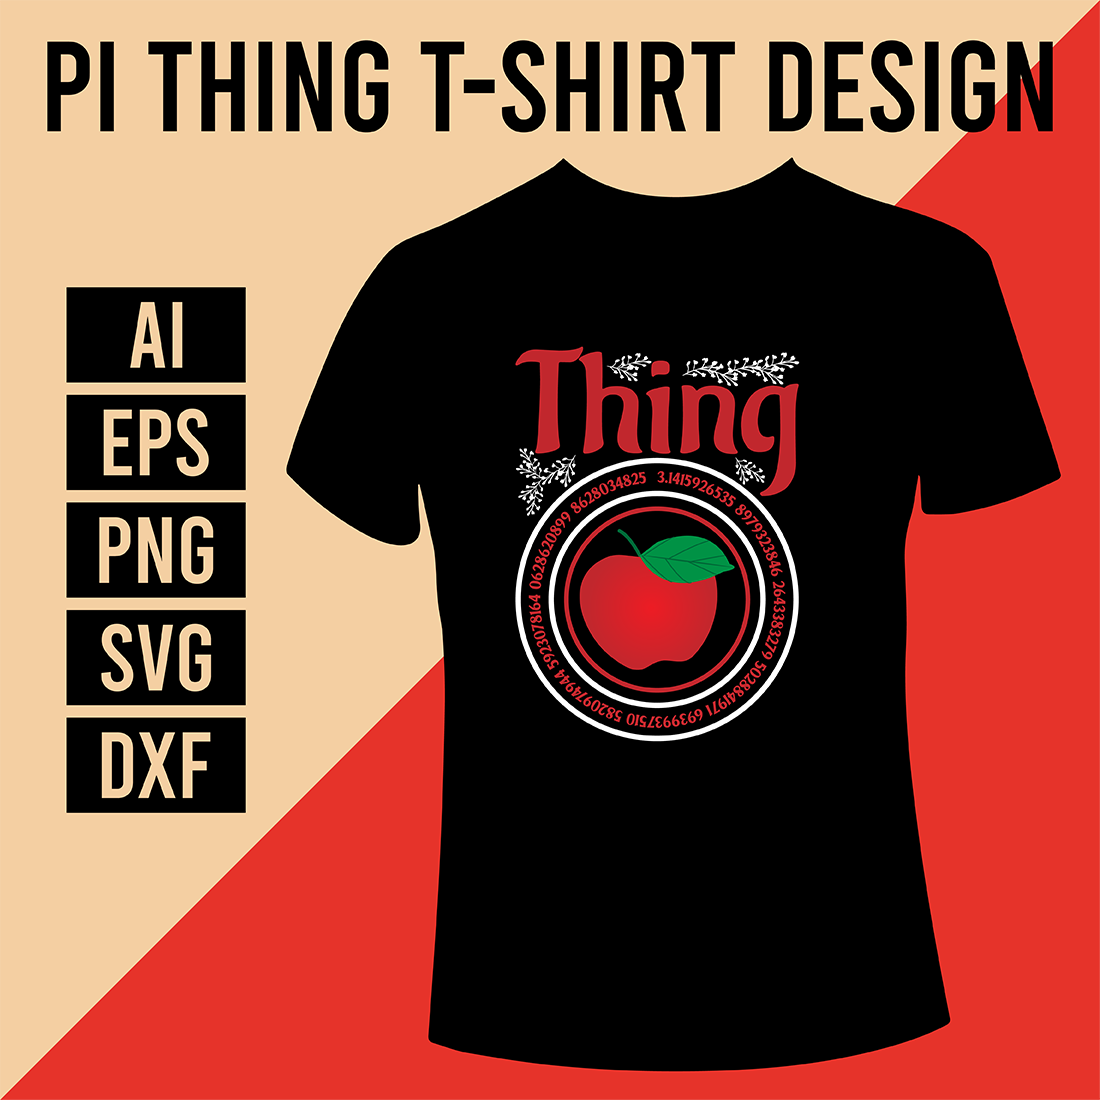 Pi Thing T-Shirt Design cover image.